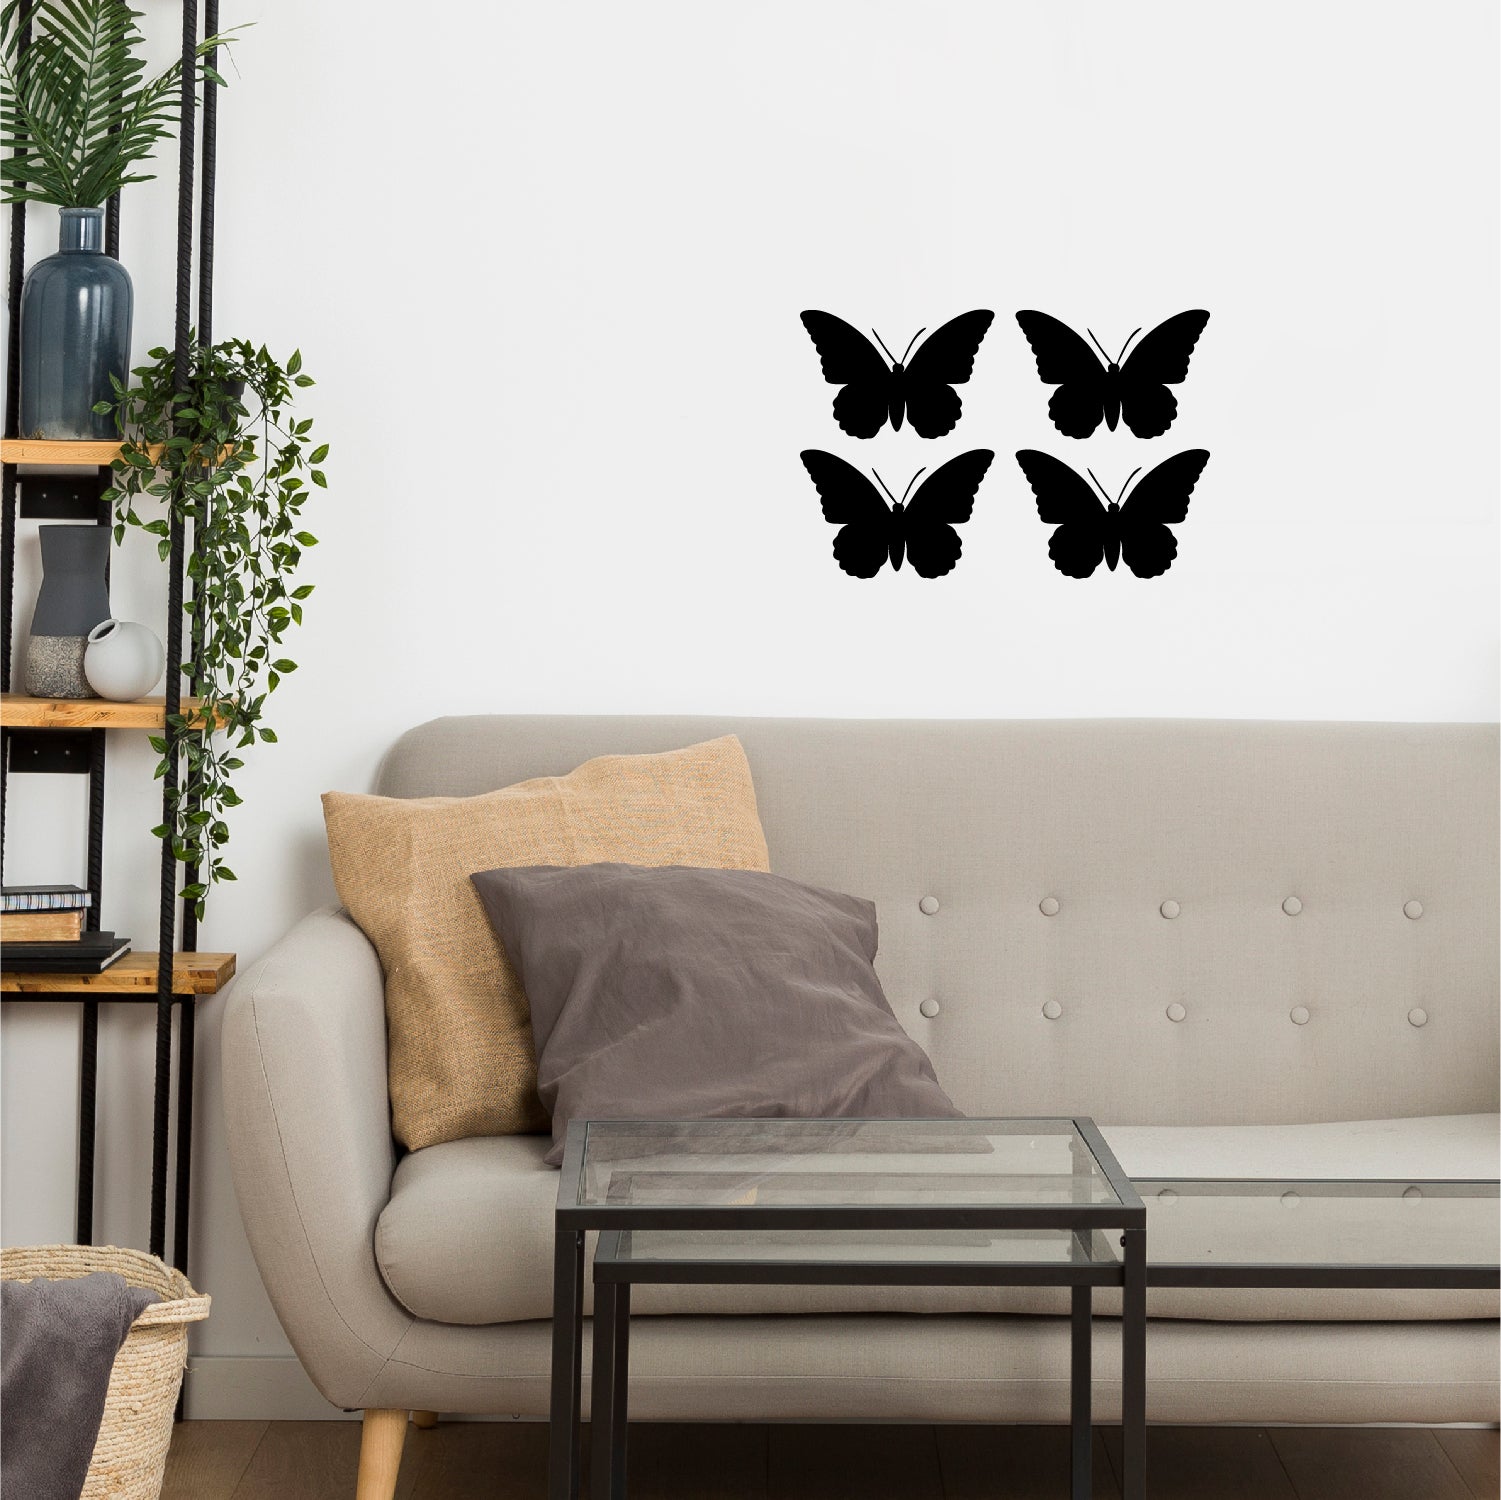 Set Of 4 "Butterflies" Black Engineered Wood Wall Art Cutouts, Ready To Hang Home Decor 4